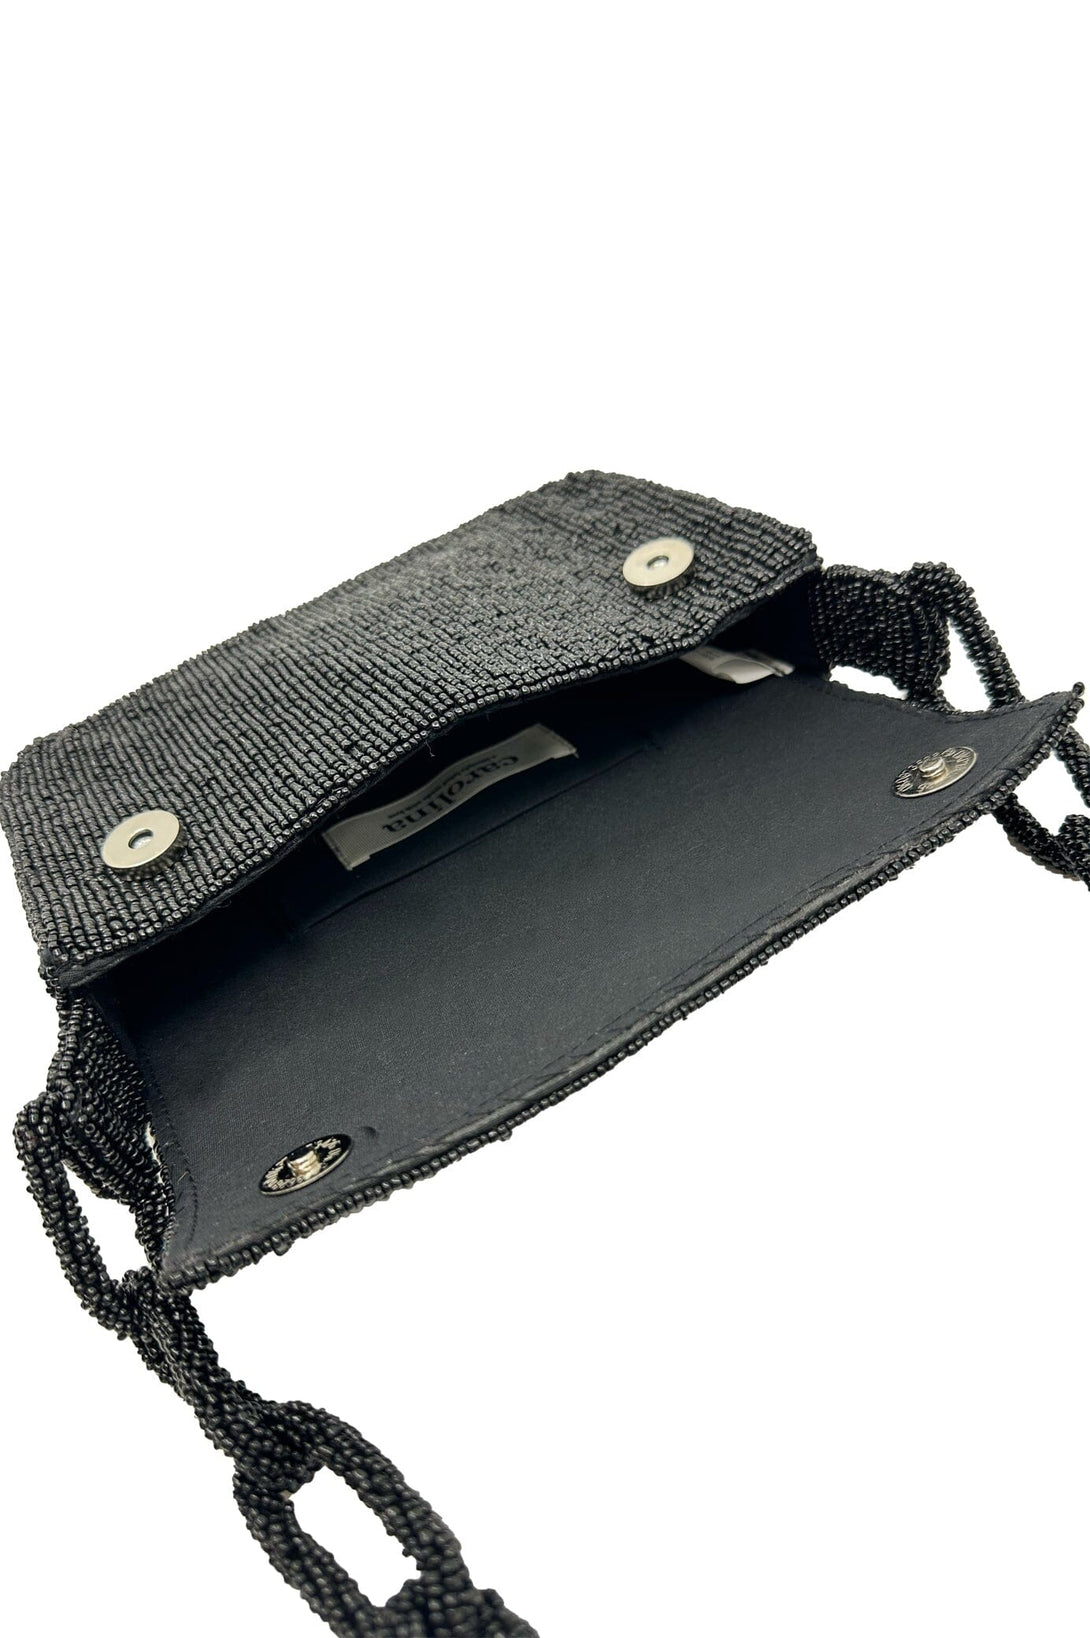 Nara Sequinned Clutch Bag Black Seasonal Handbag